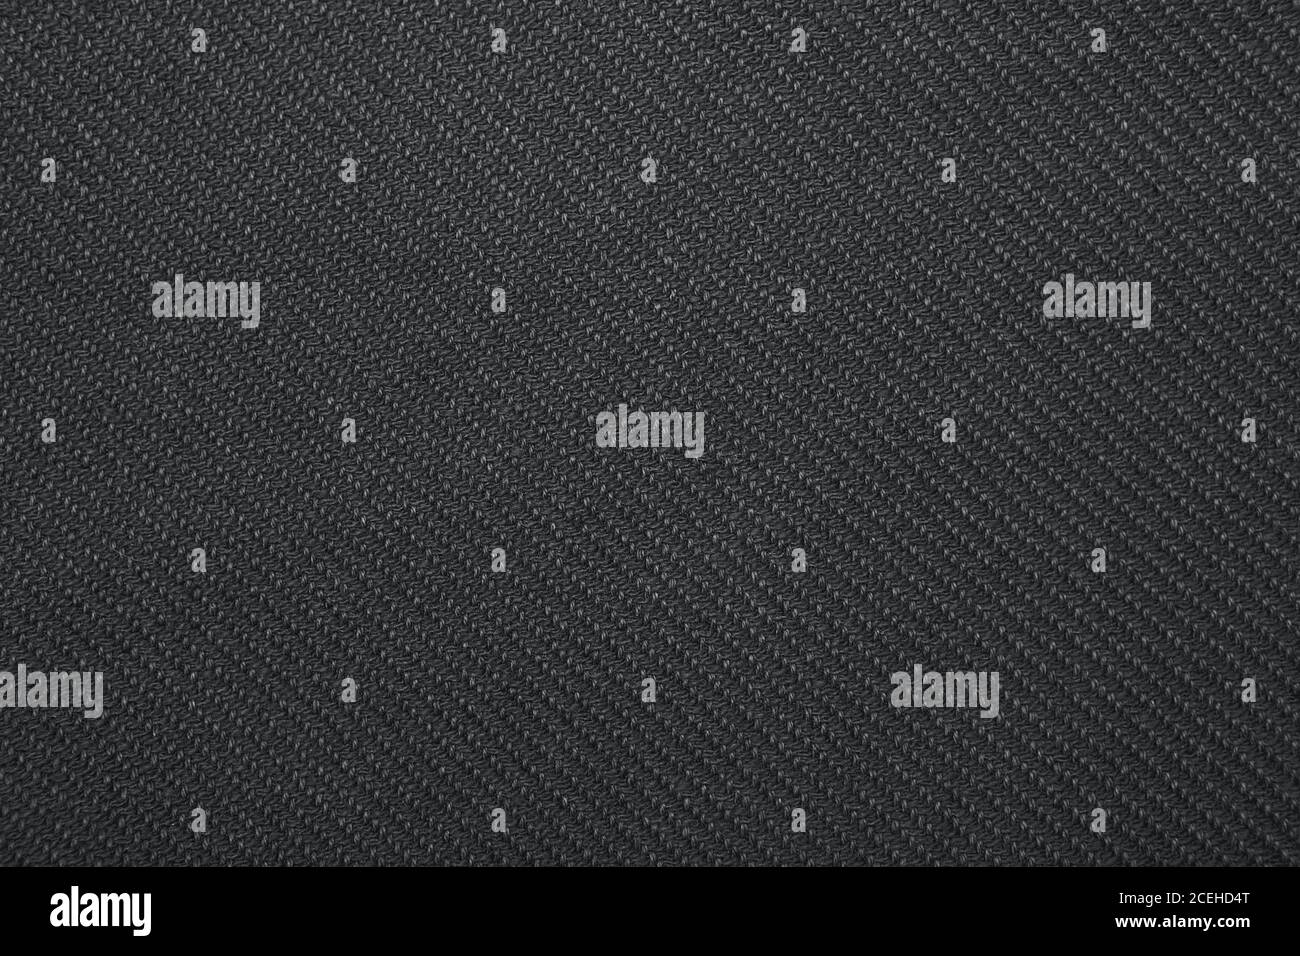 Black twill weave fabric pattern texture background closeup Stock Photo